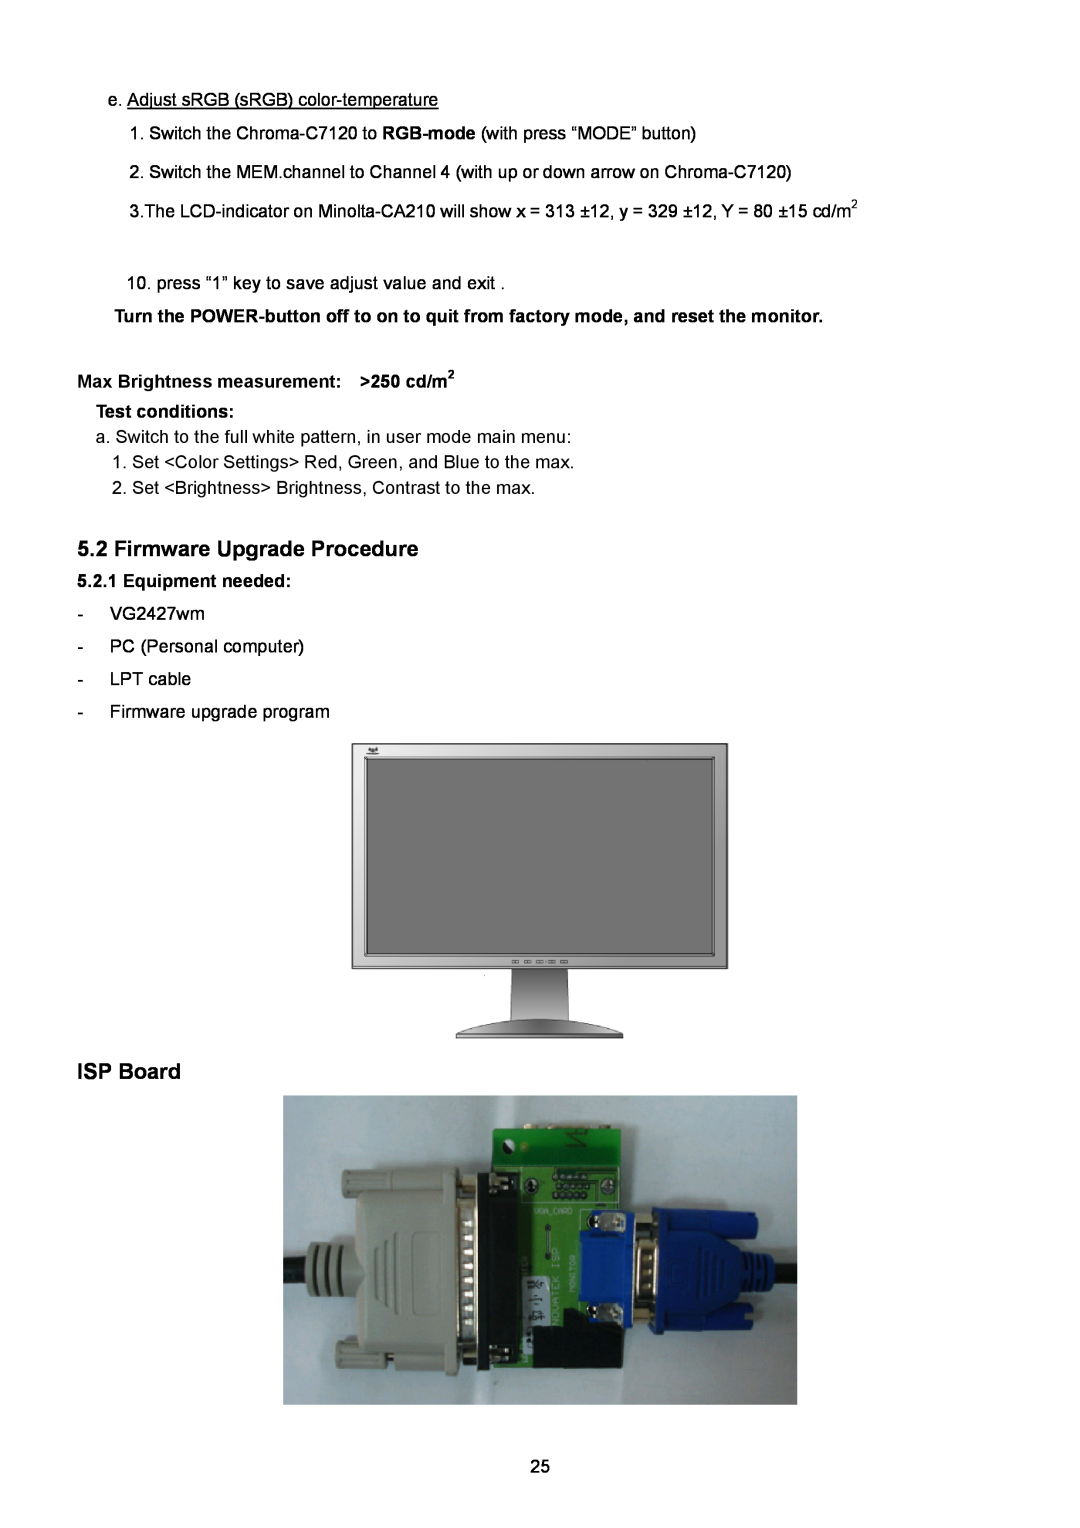 ViewSonic VSXXXXX Firmware Upgrade Procedure, ISP Board, Max Brightness measurement 250 cd/m2 Test conditions 